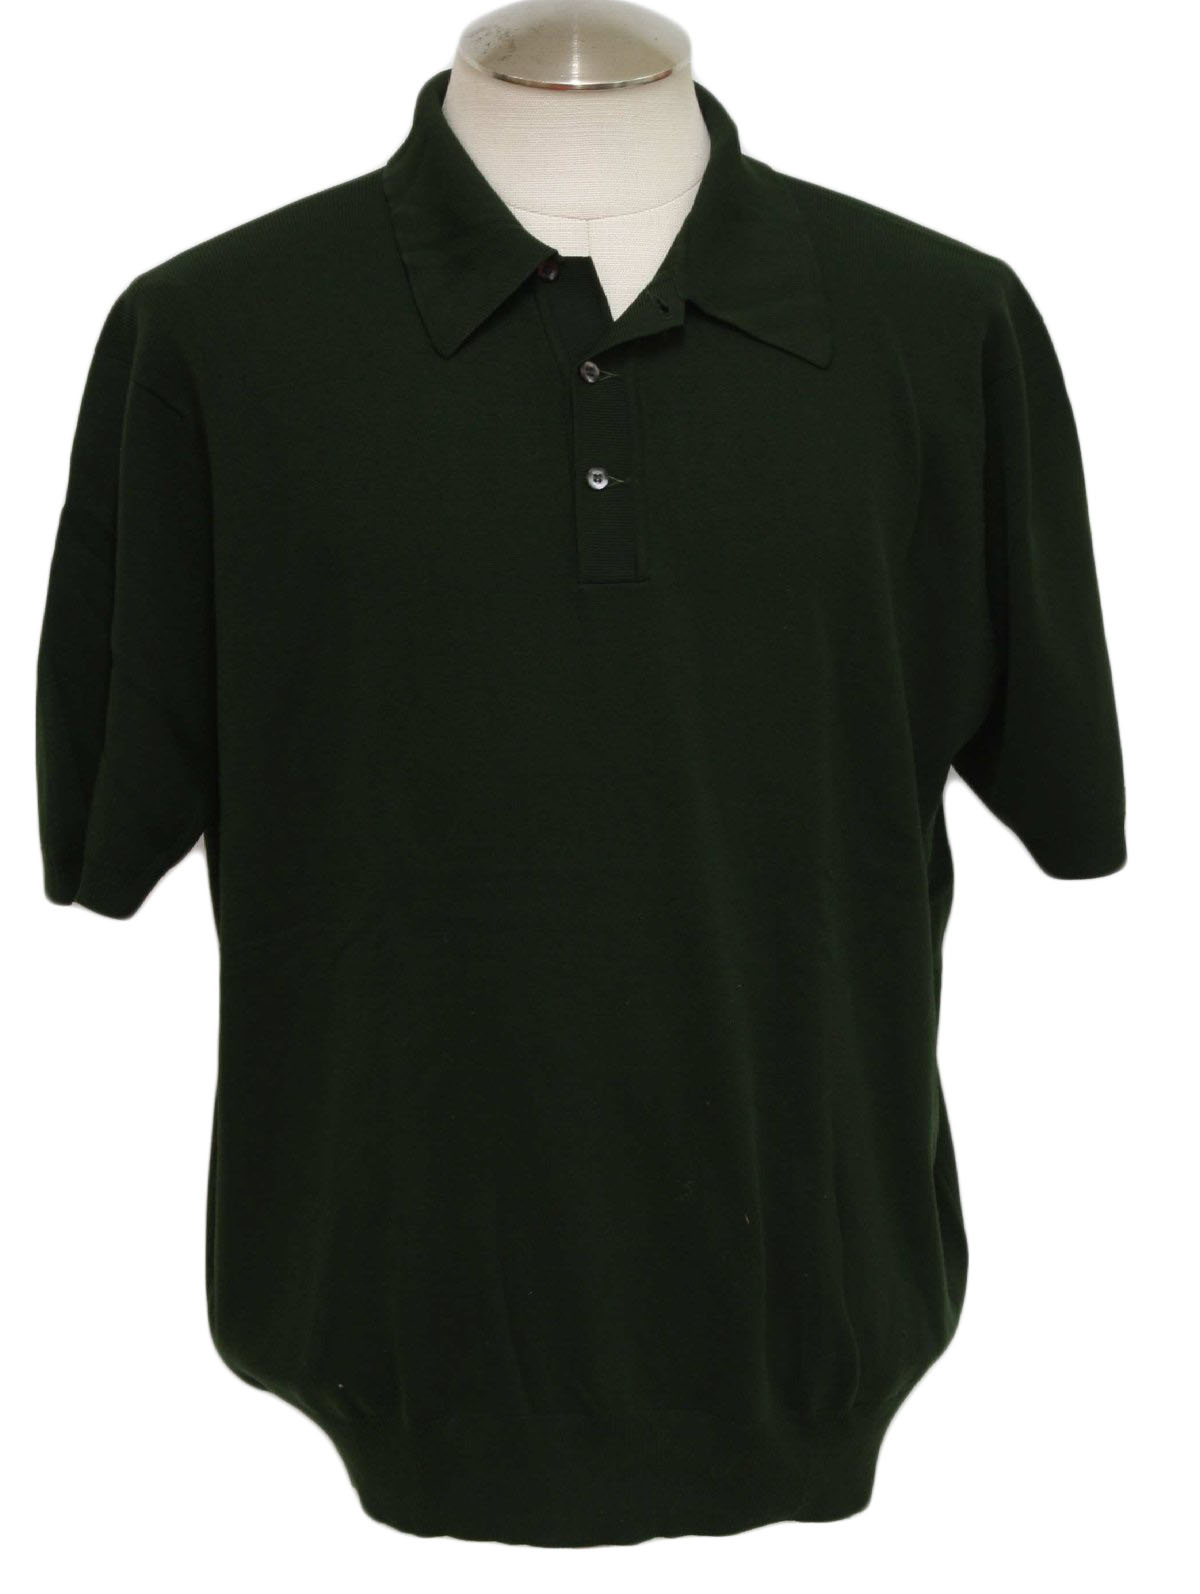 Puritan 60's Vintage Knit Shirt: 60s -Puritan- Mens deep green ban-lon ...